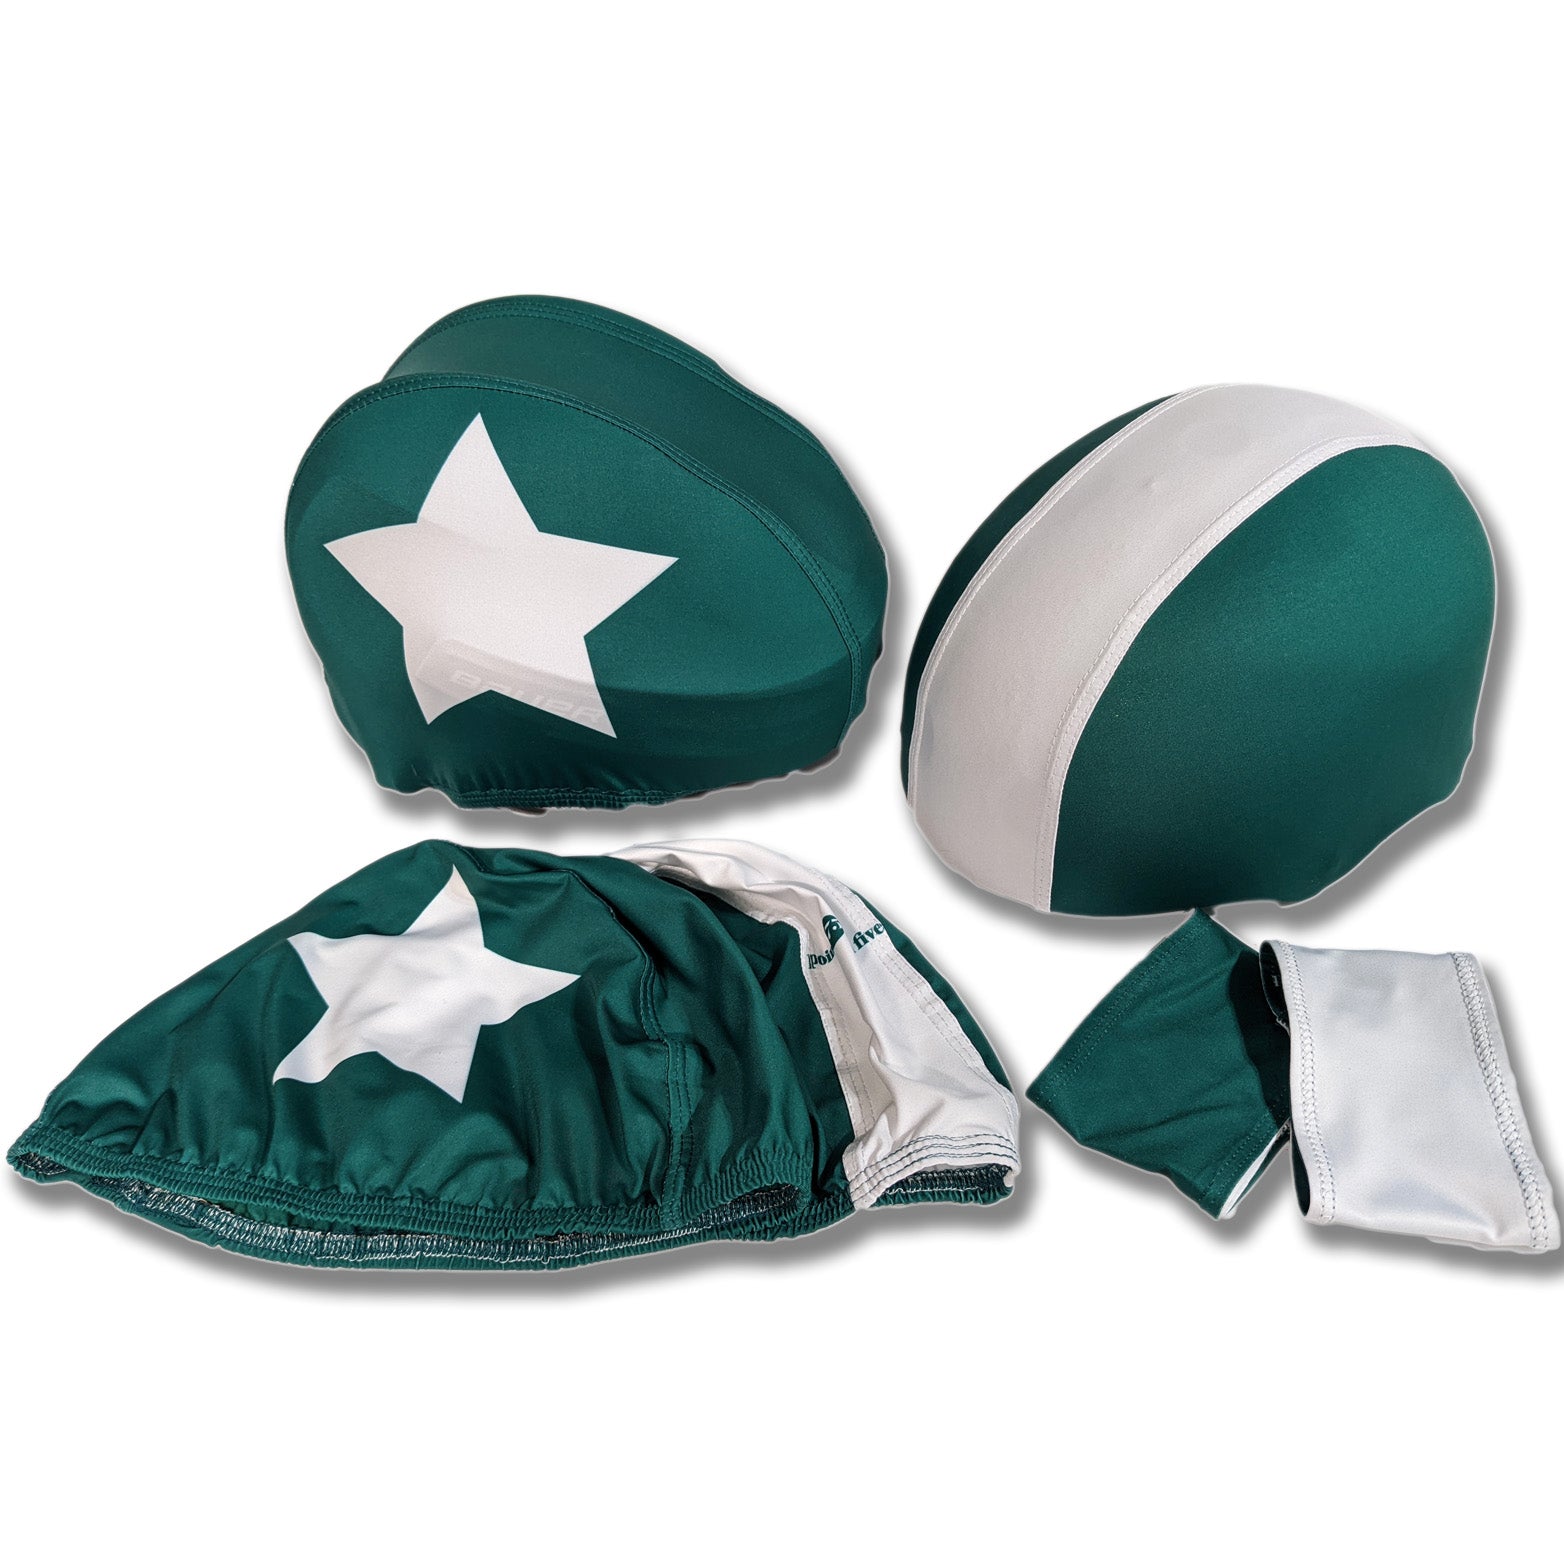 Custom Sublimated Helmet Covers-Double Set